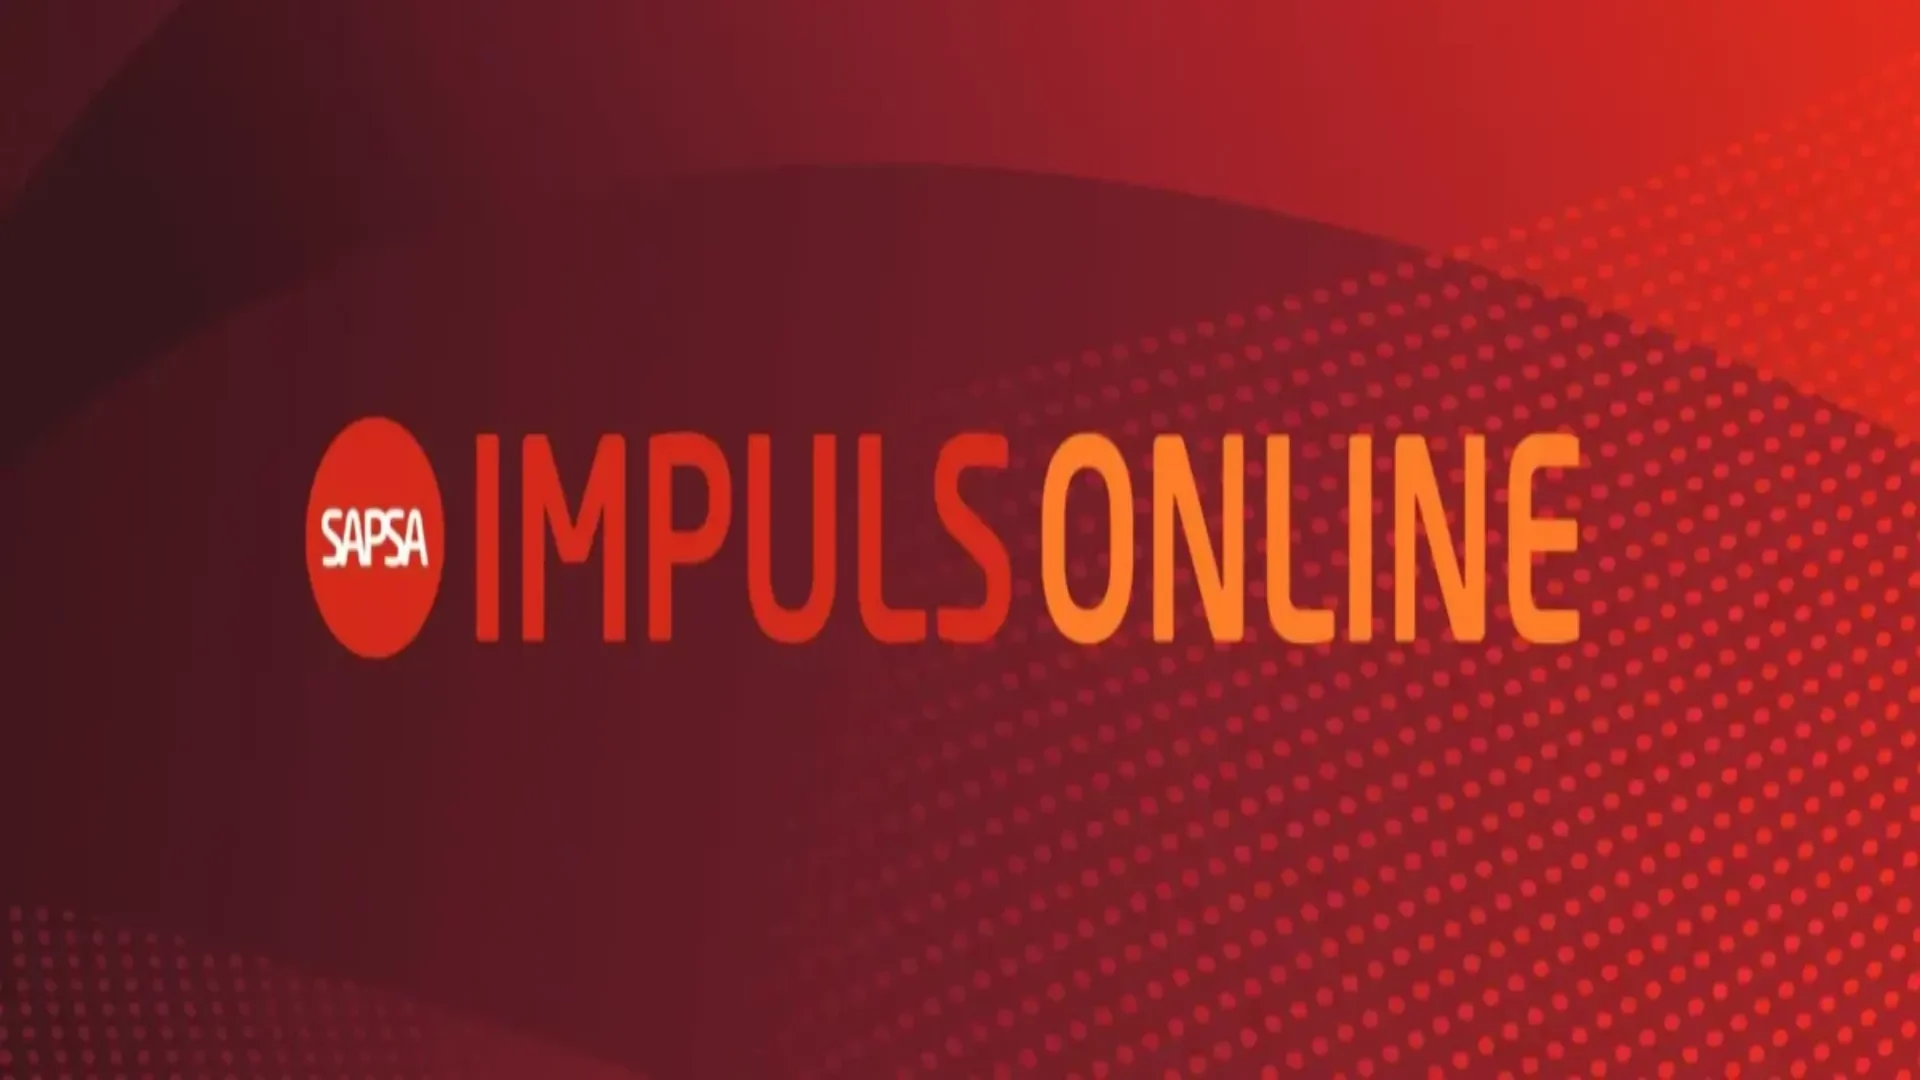 SAPSA-impulse-online-